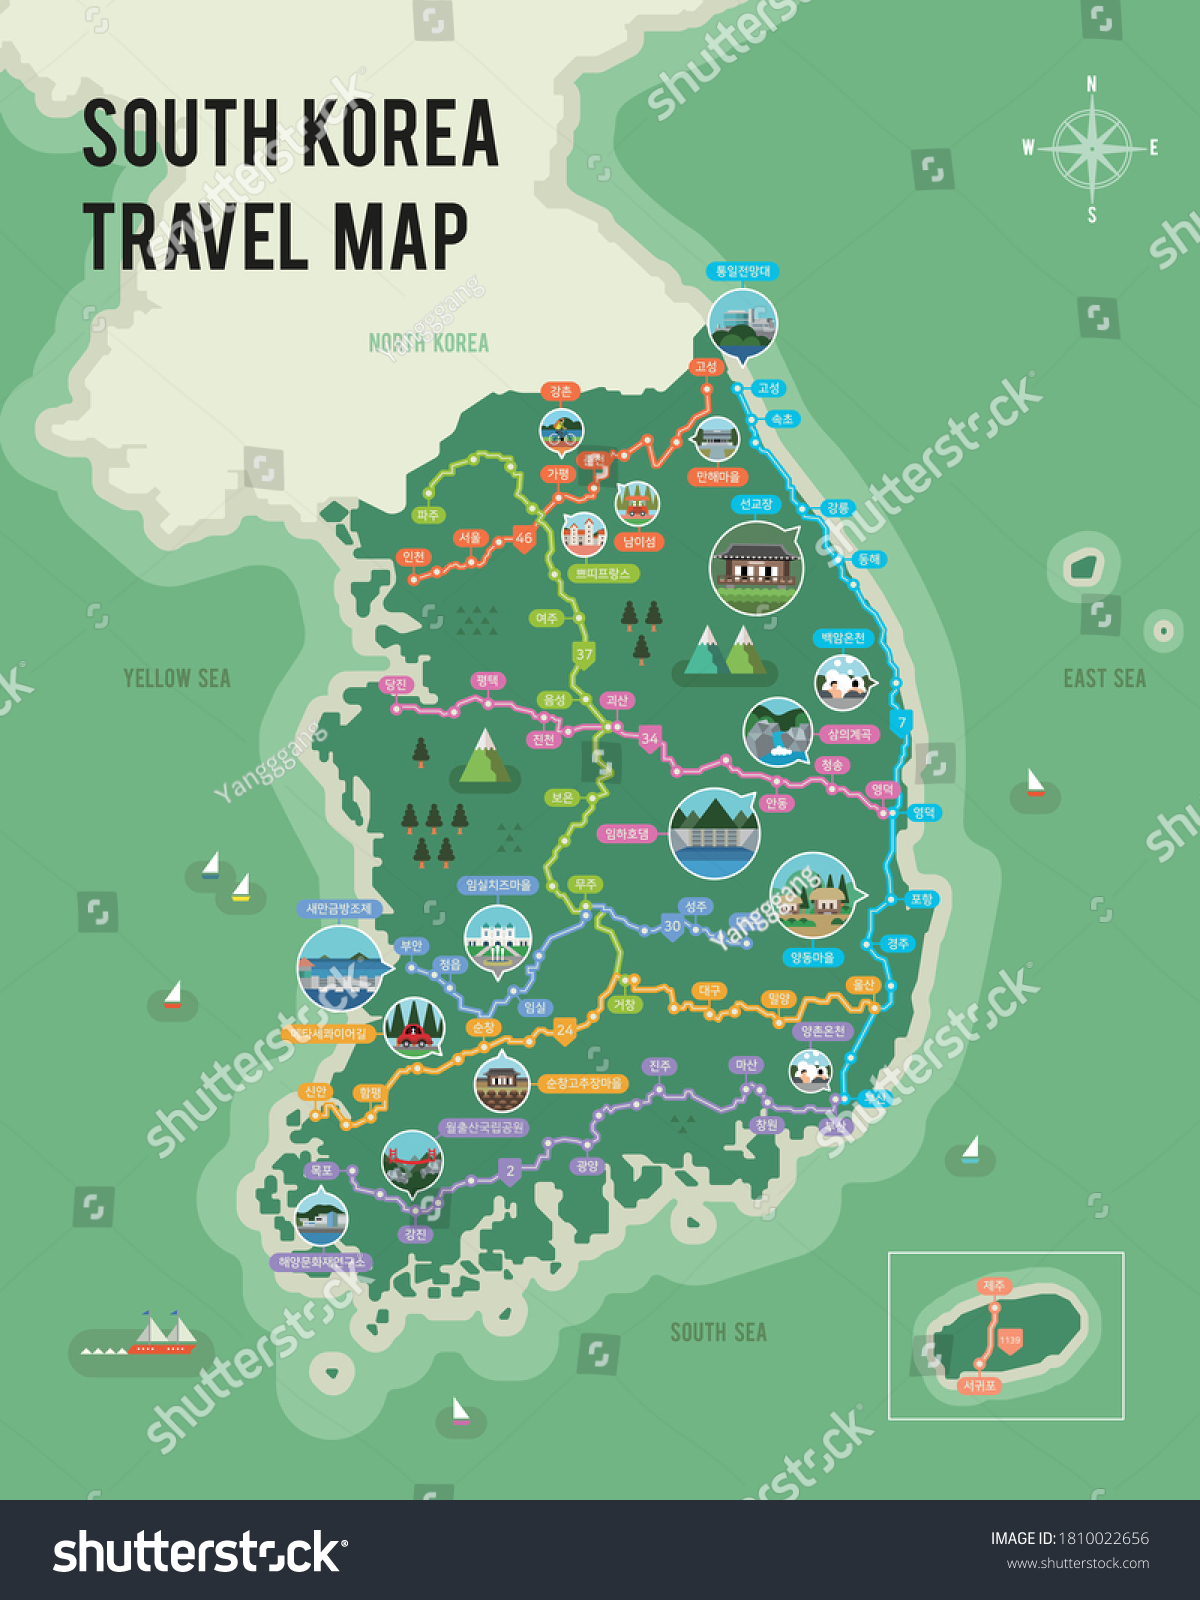 South Korea Travel Map South Korea Tourist Destination Map Vector Stock Vector (Royalty Free)  1810022656 | Shutterstock